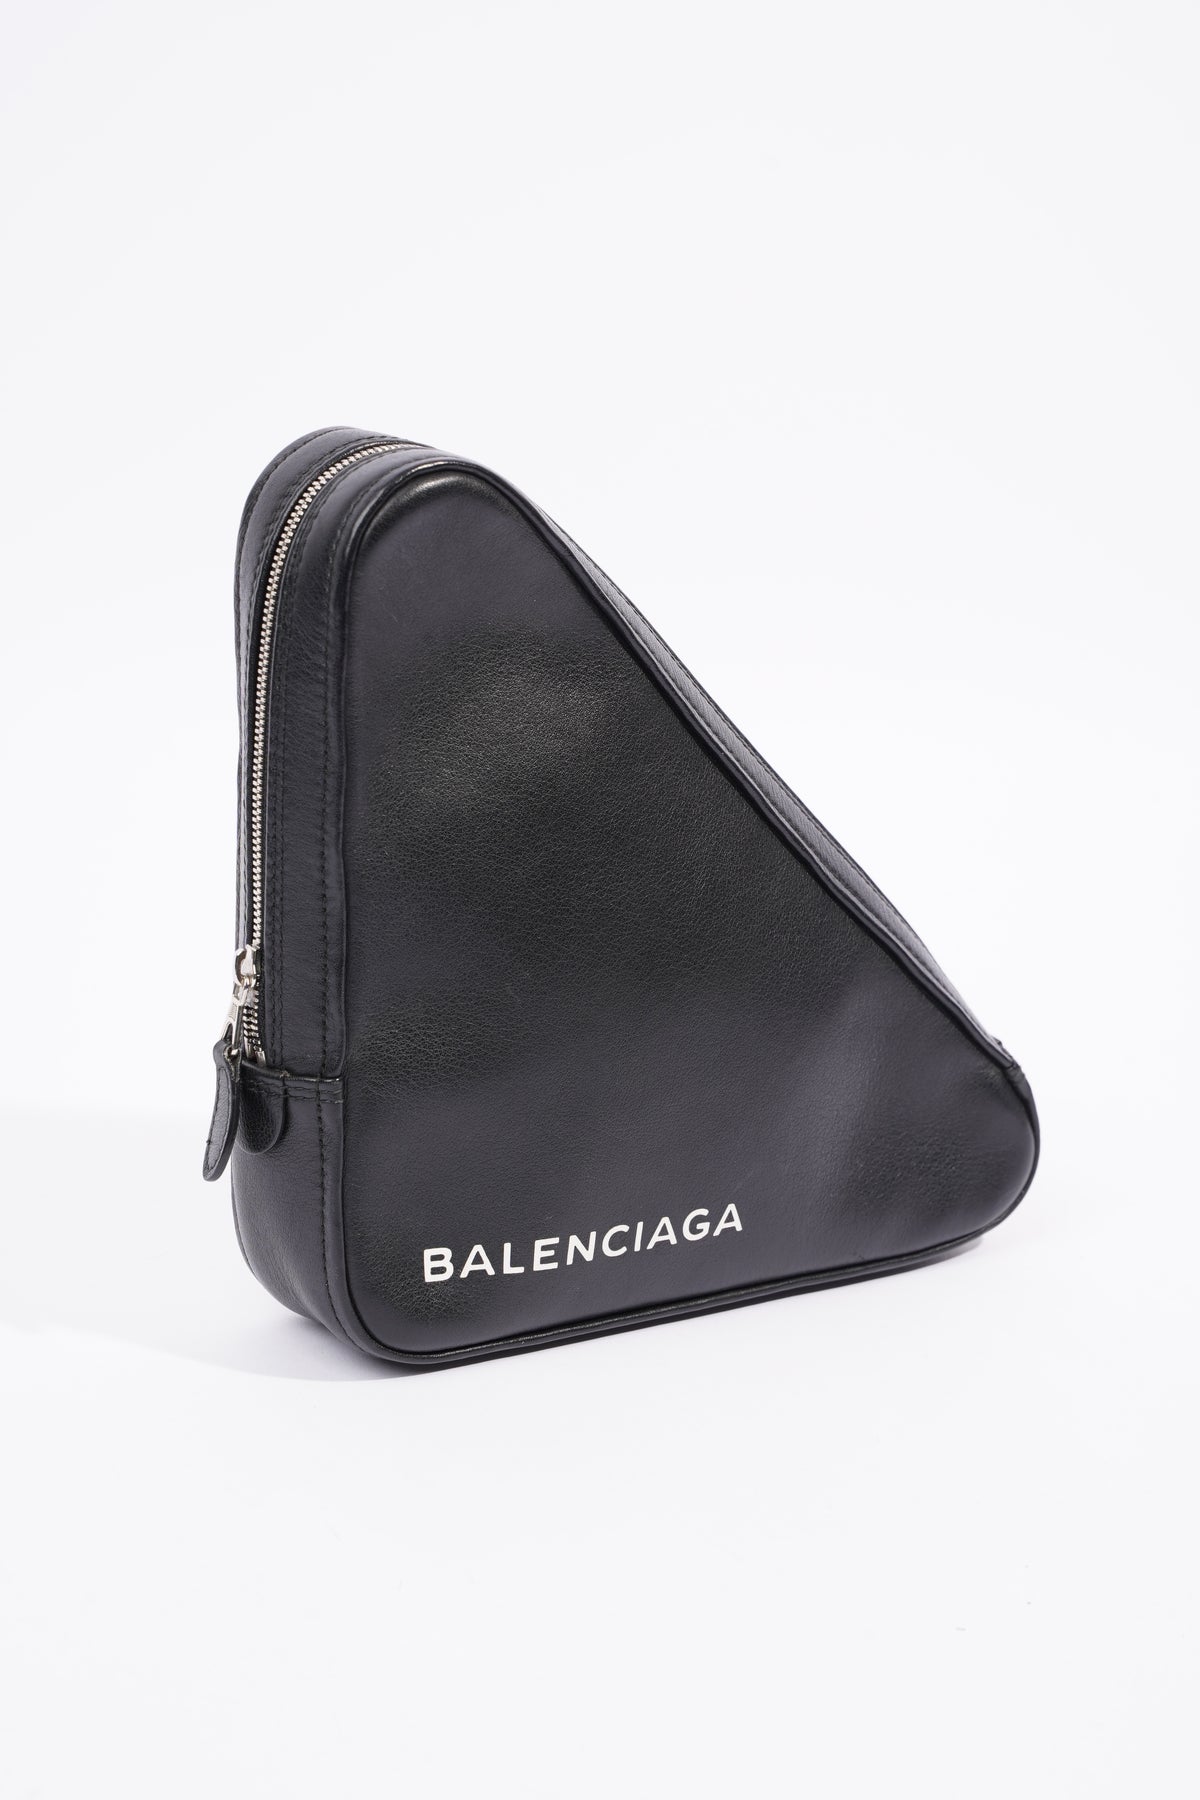 Balenciaga – Curated by Charbel